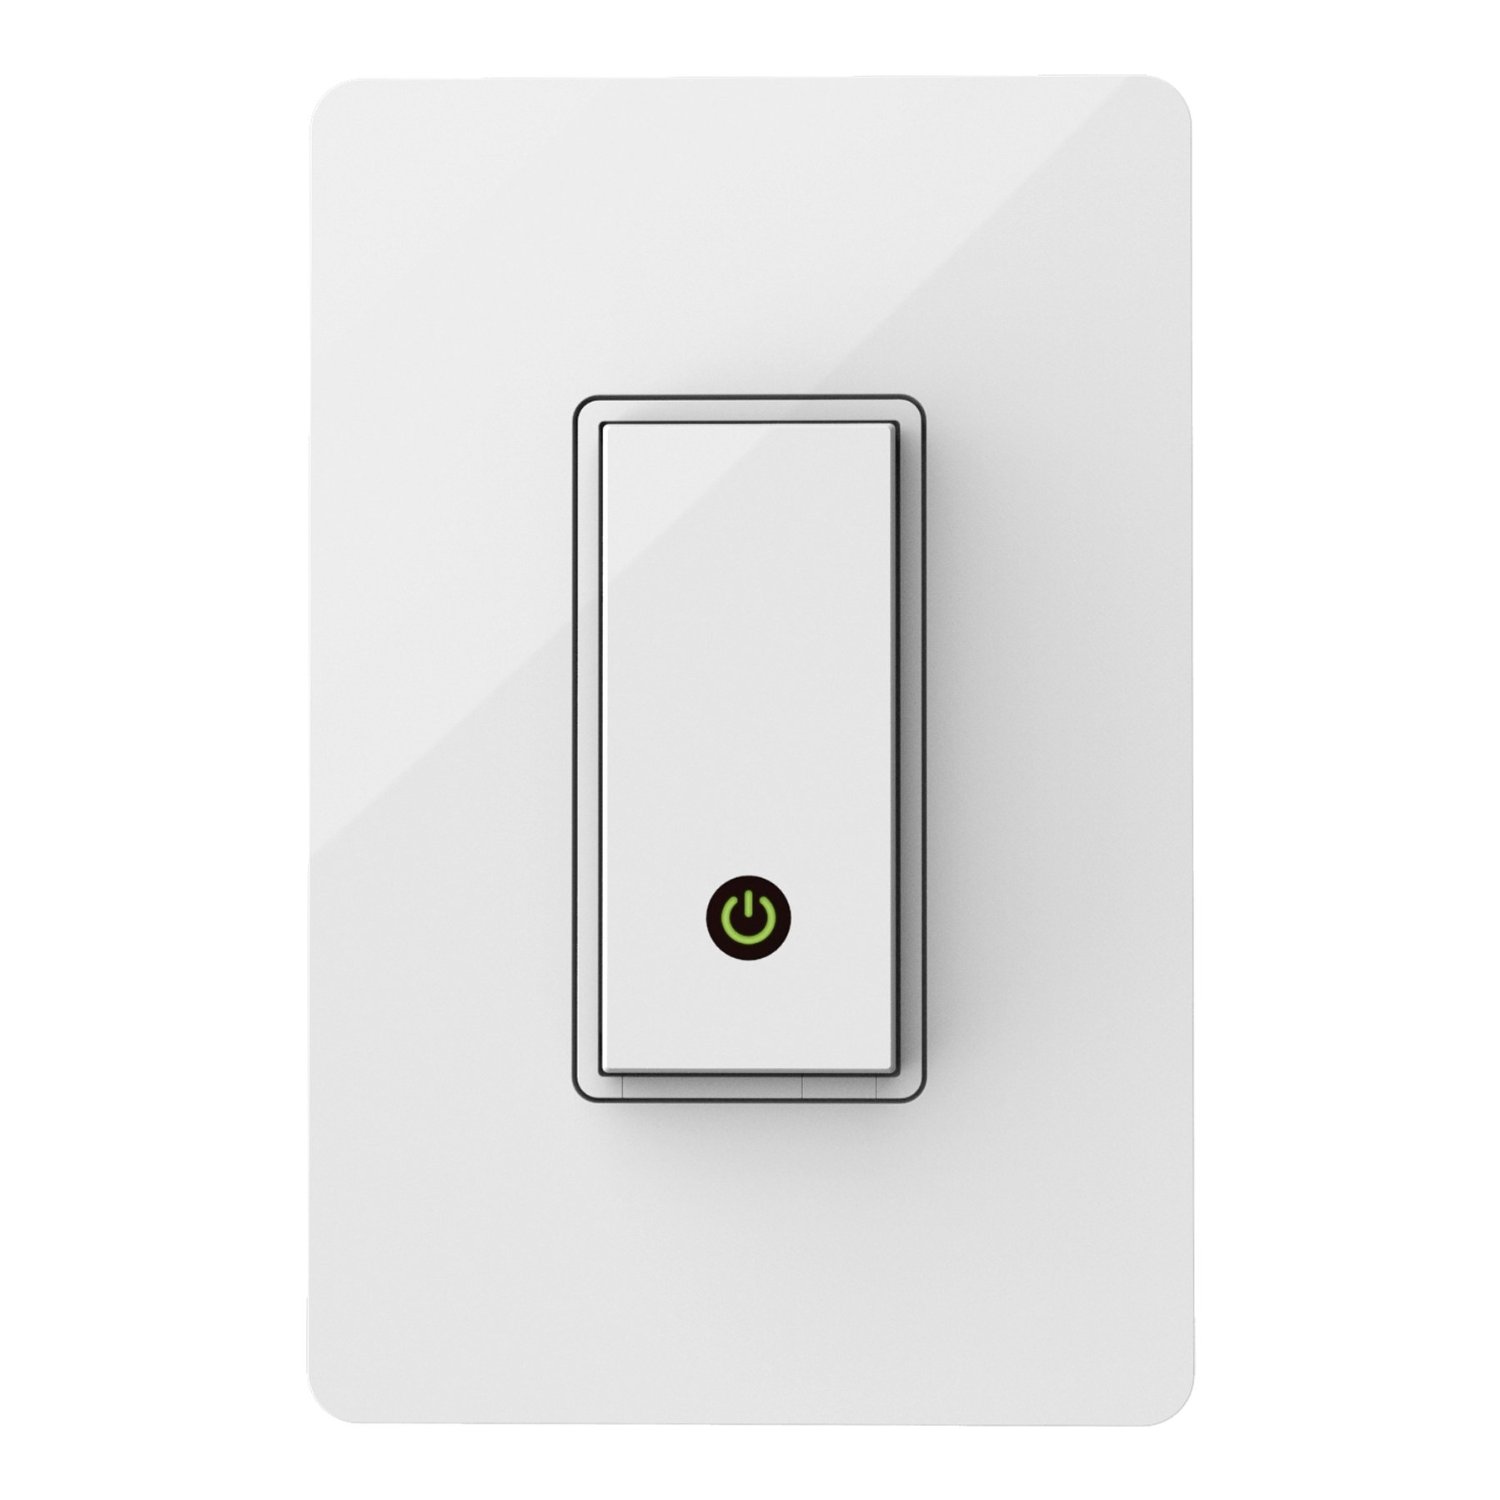 Geek insider, geekinsider, geekinsider. Com,, wemo: the smartphone-controlled light switch, uncategorized